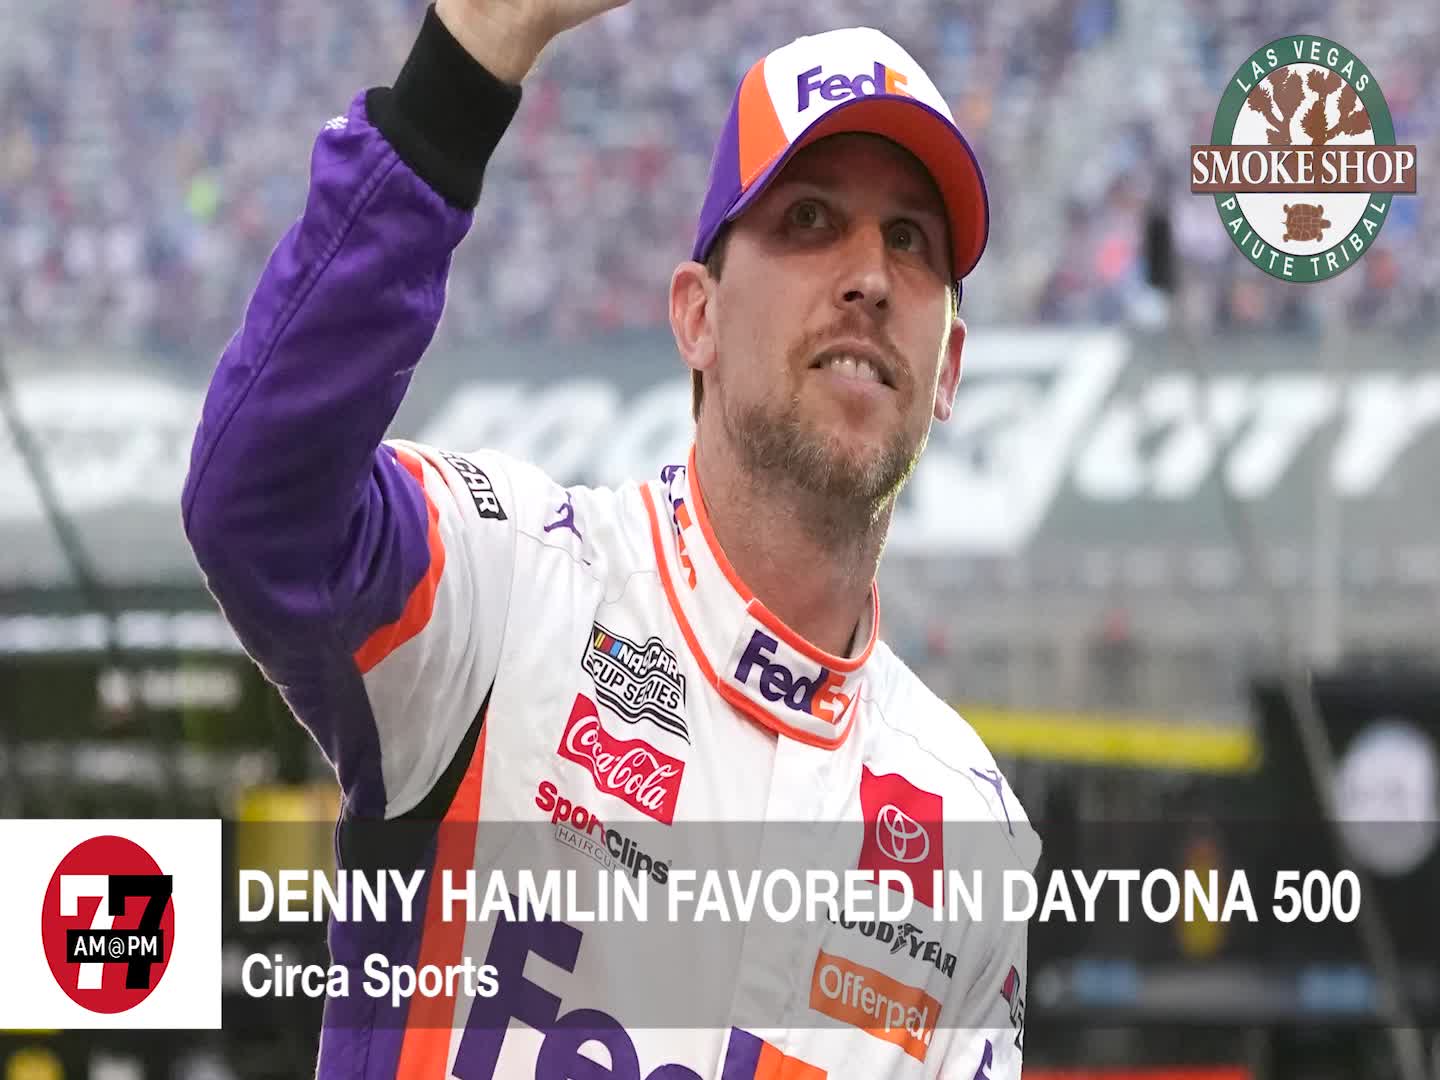 Denny Hamlin Favored in Daytona 500